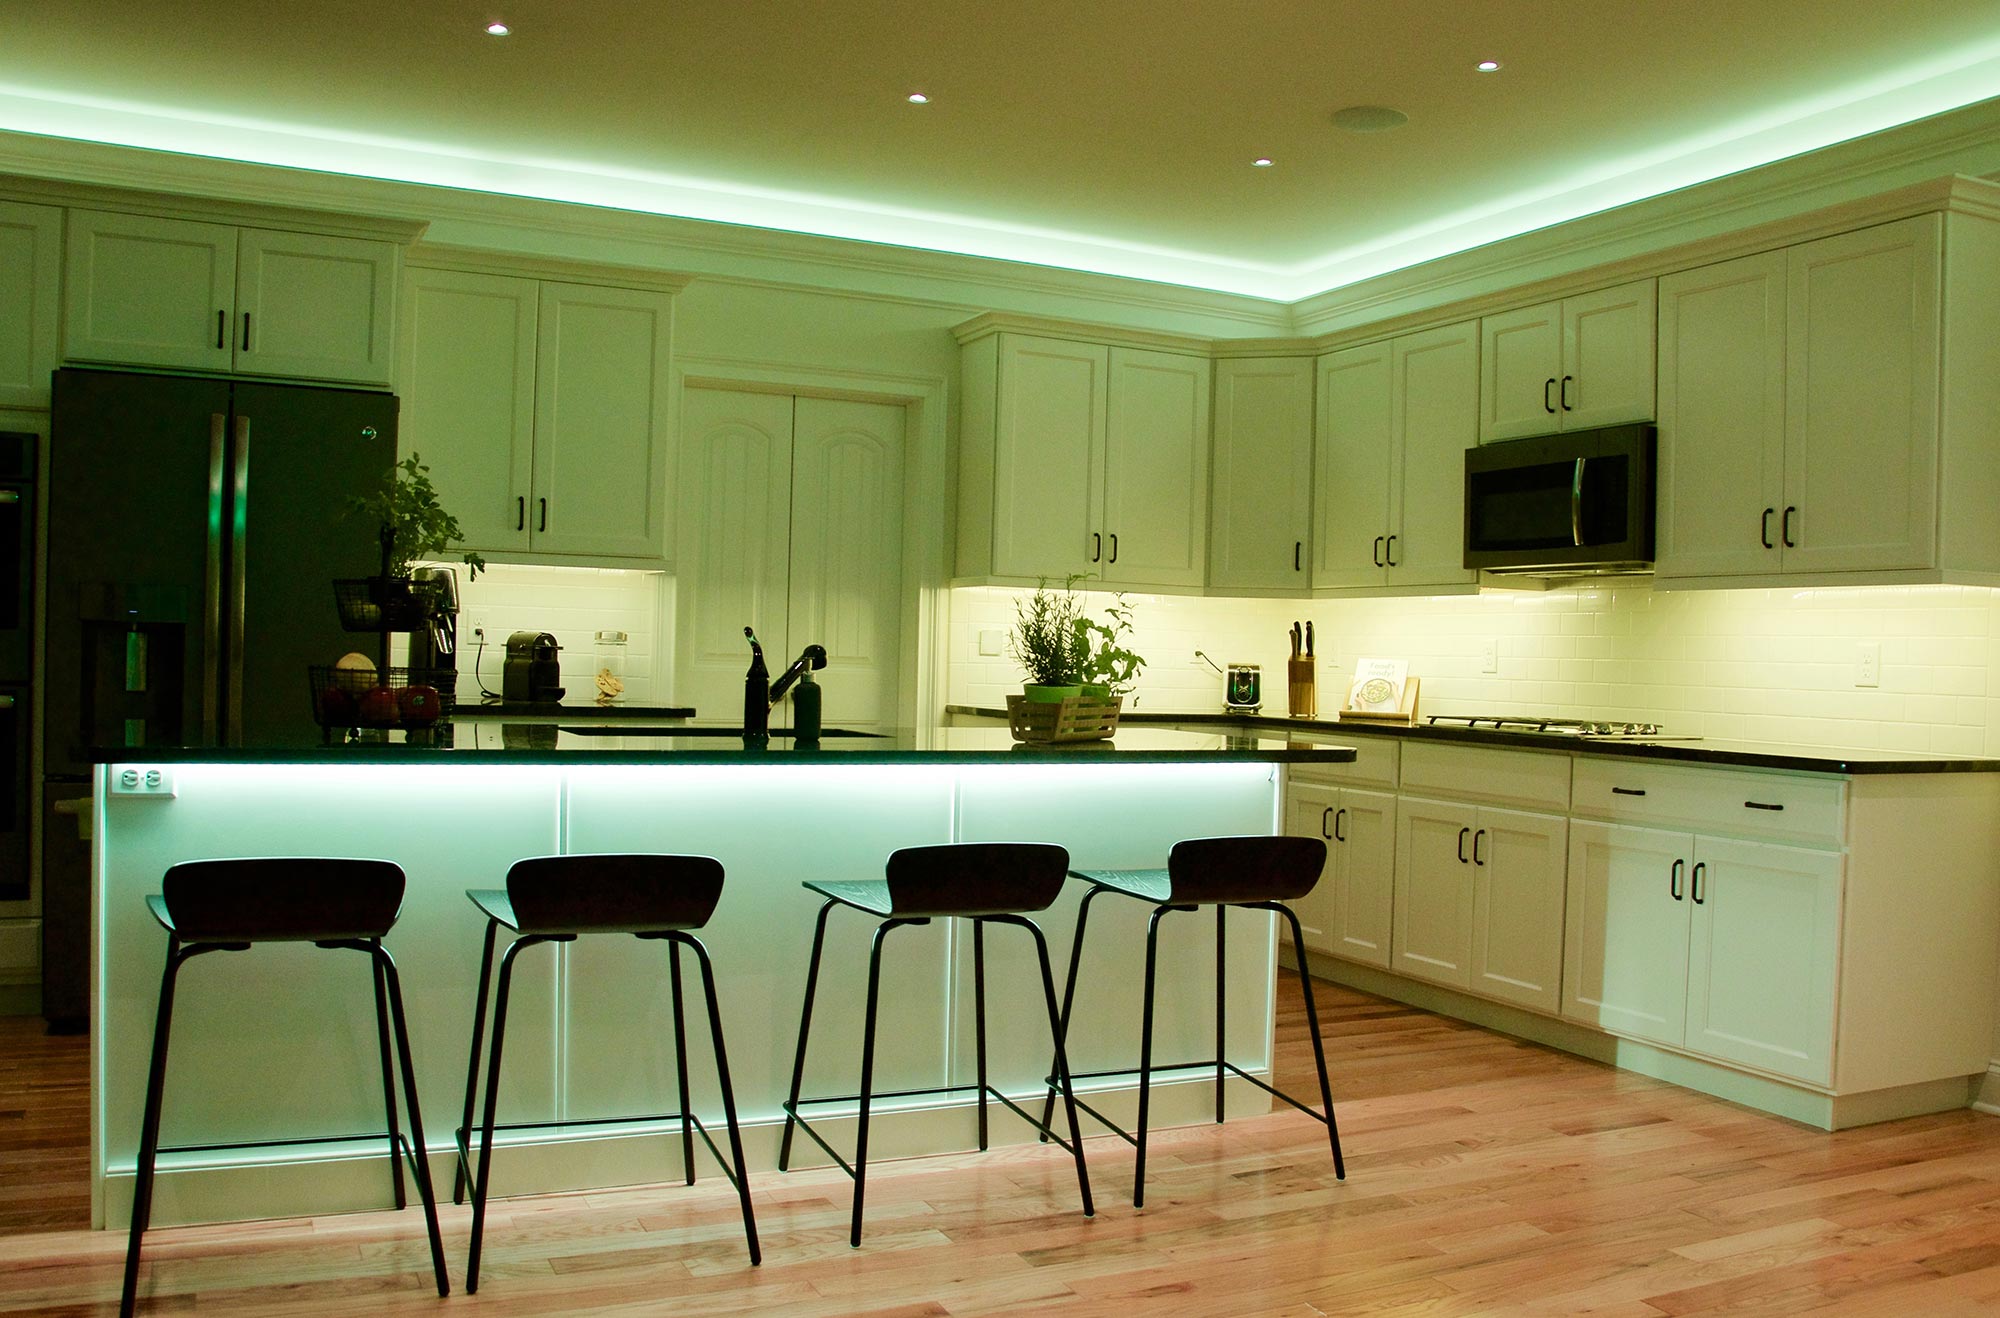 ambient light in kitchen